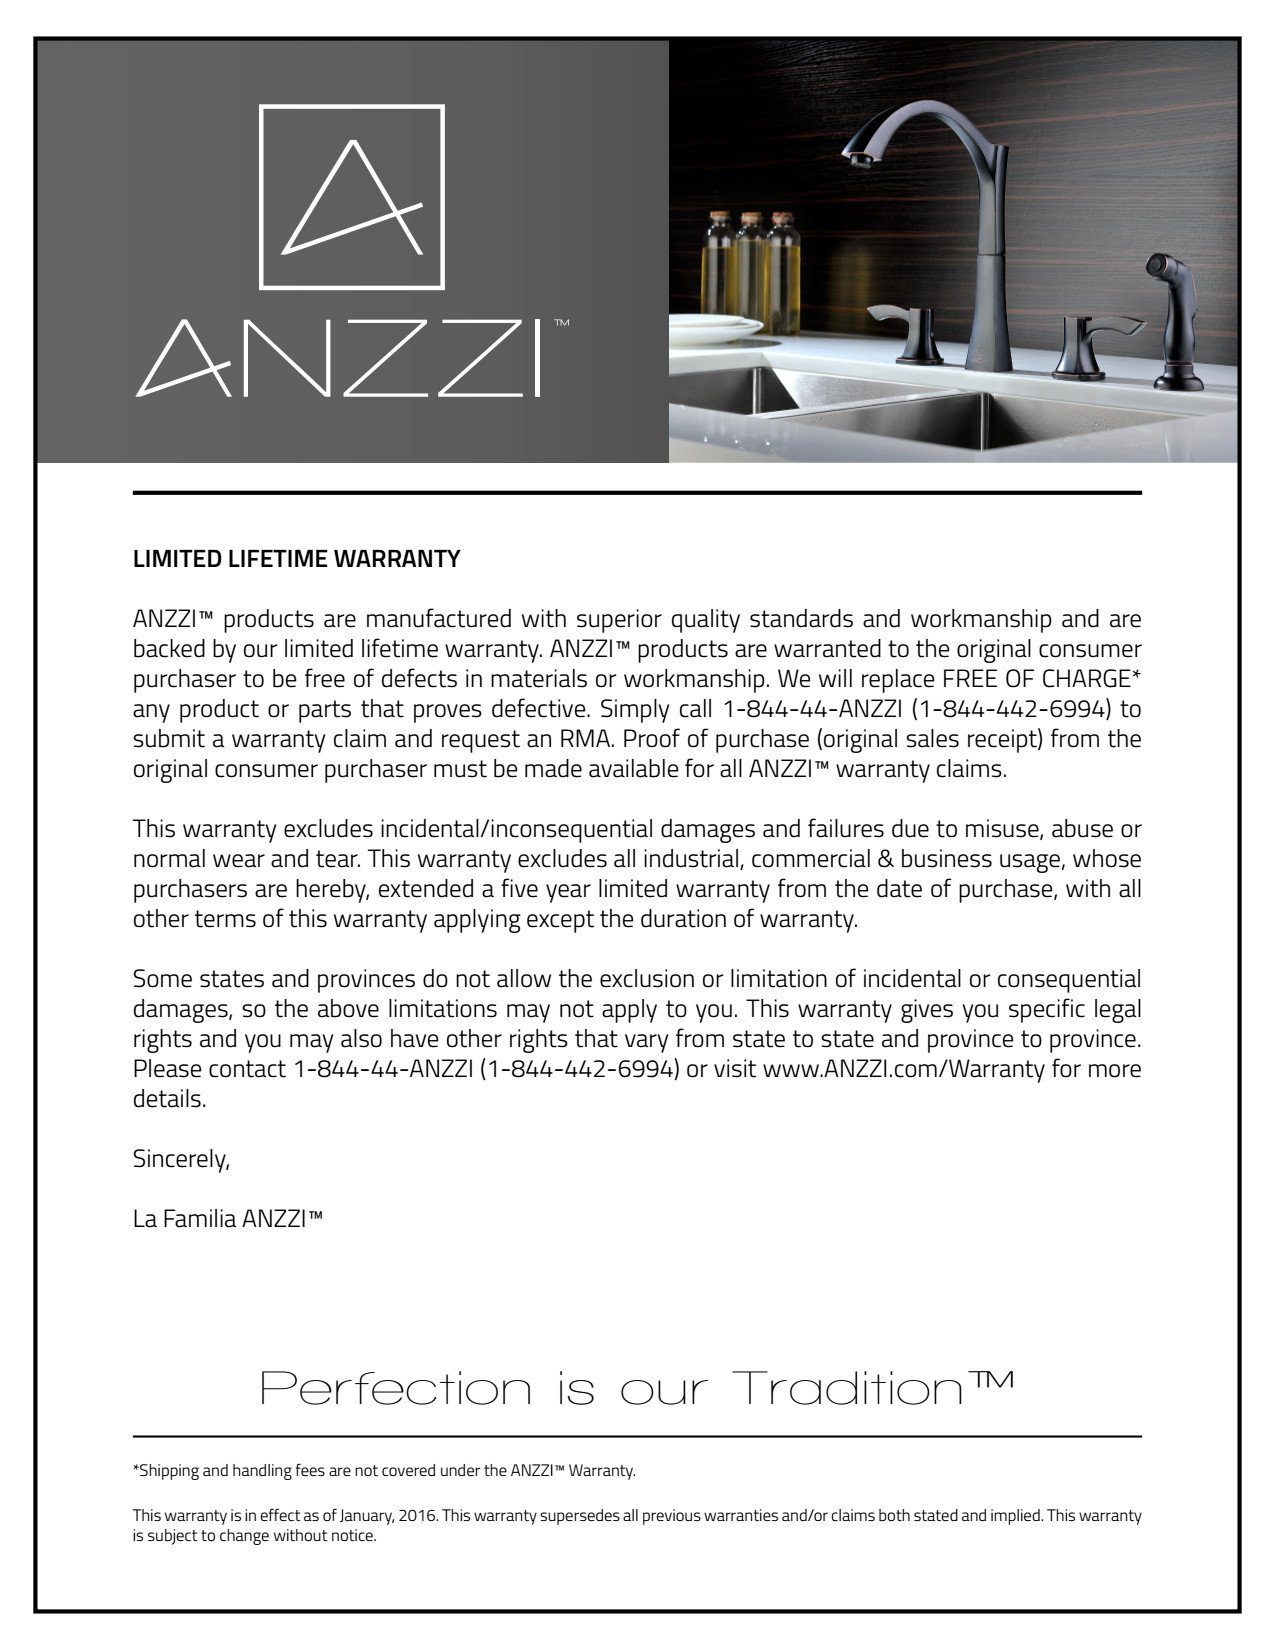 ANZZI Arc Series LS-AZ214 Vessel Sink - Glass Bathroom Sink ANZZI 